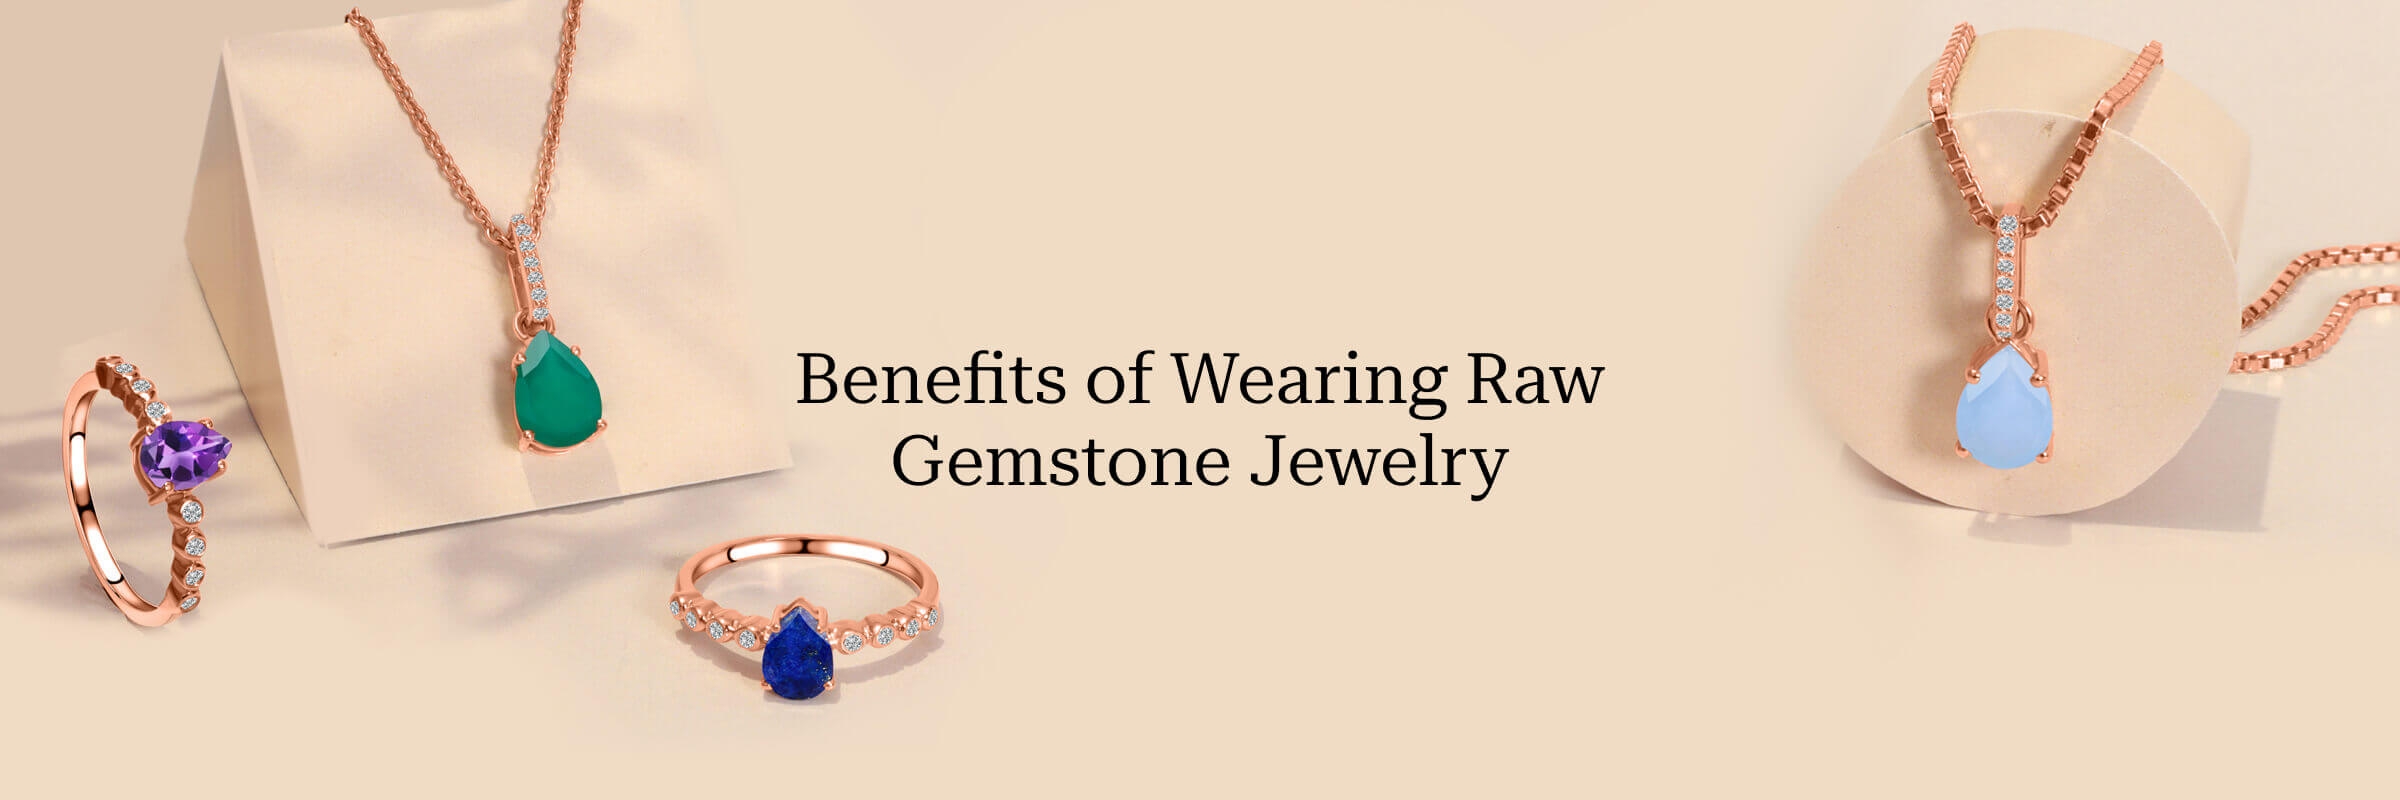 Benefits of Wearing Raw Gemstone Jewelry